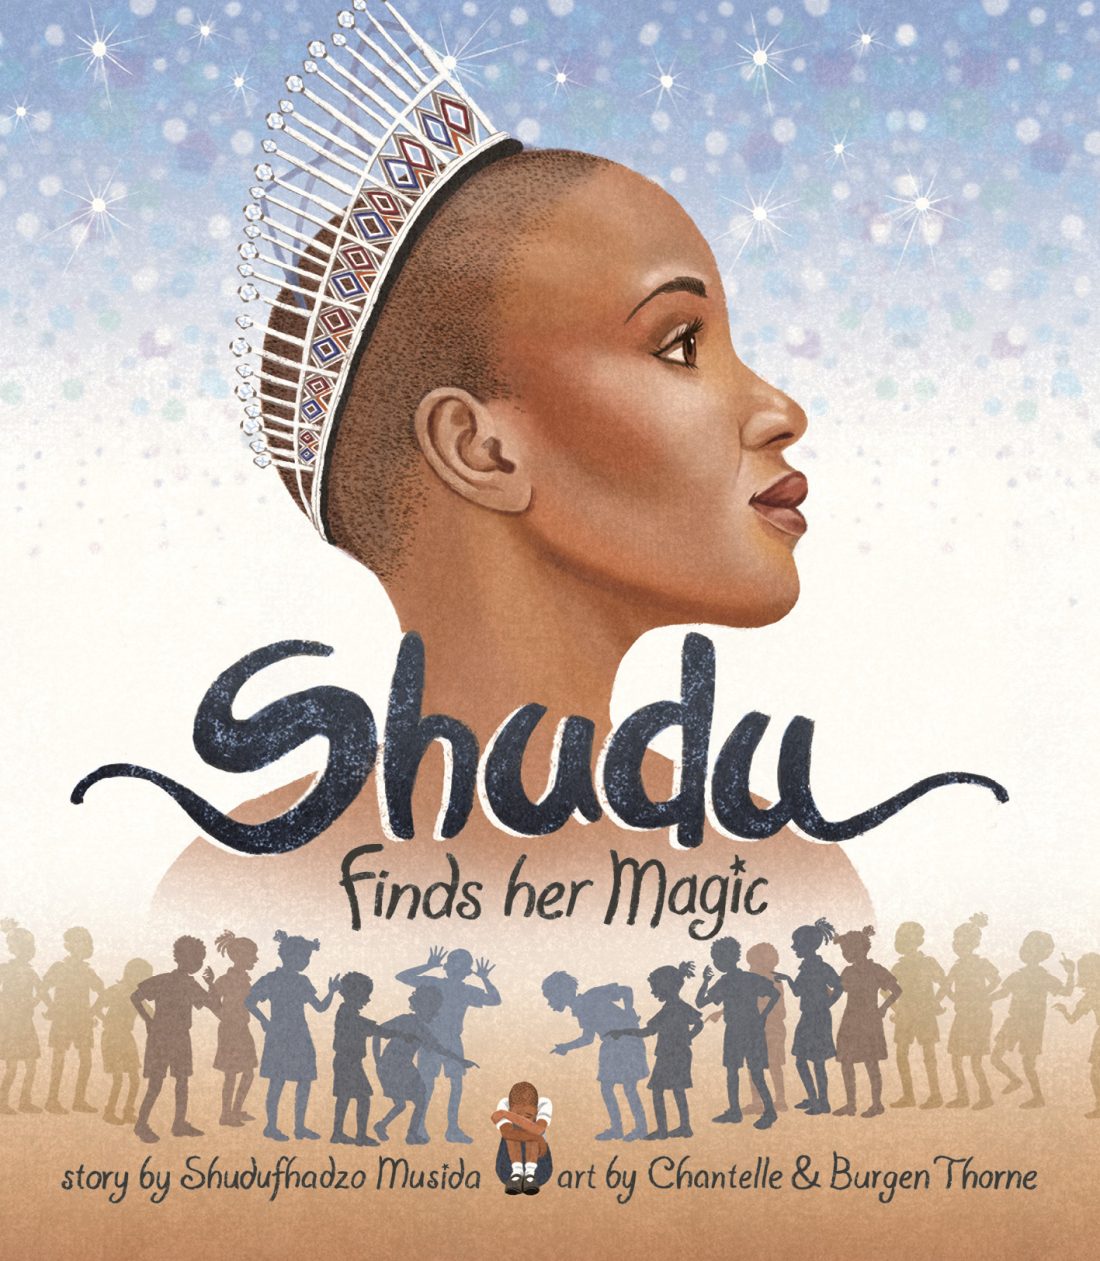 Miss SA Shudufhadzo Musida Is Now An Author Of A Children’s Book